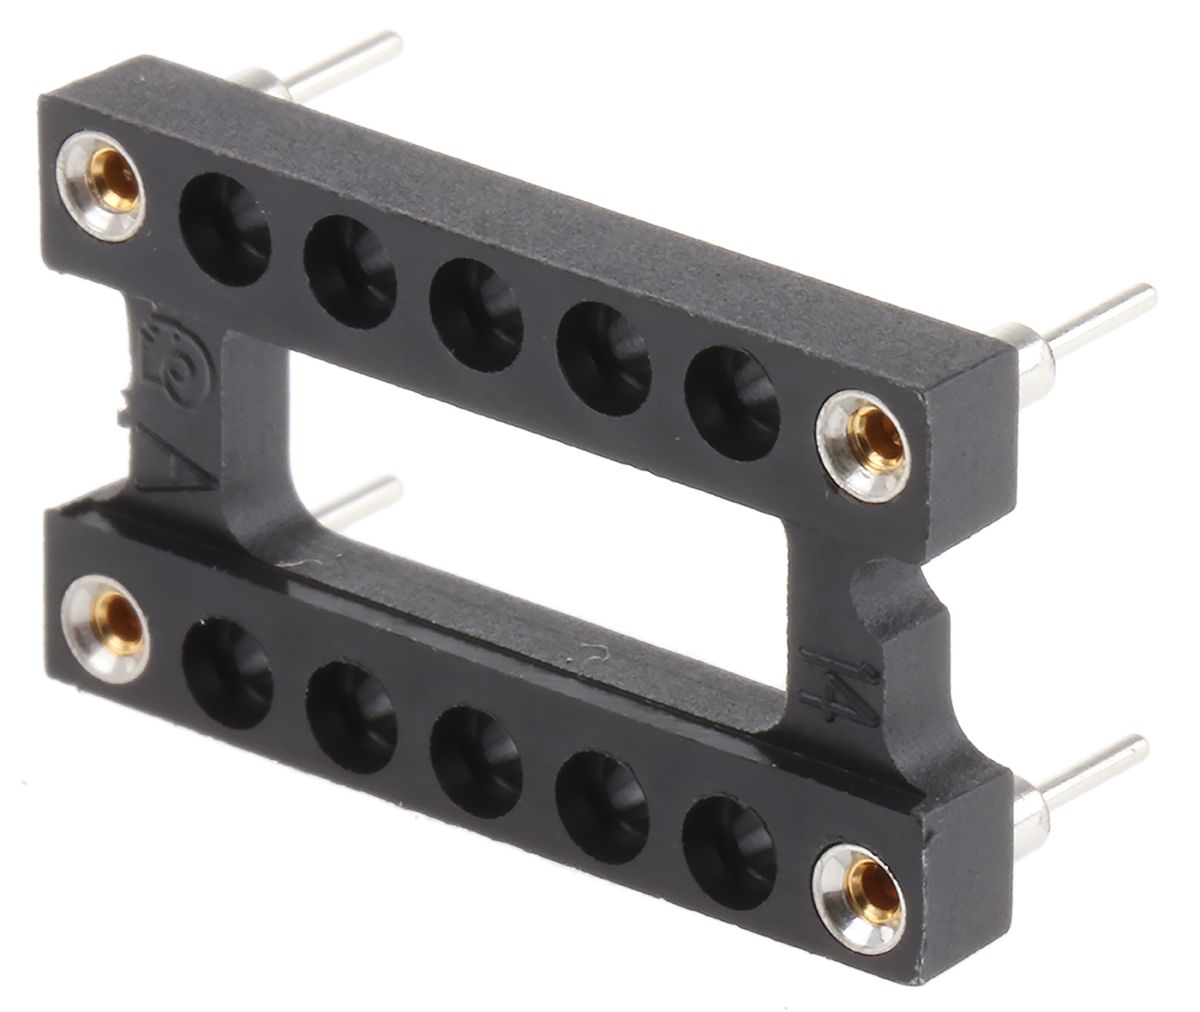 Aries Electronics Oszillator Sockel DIL-Gehäuse Female 15.24mm Raster 14-polig